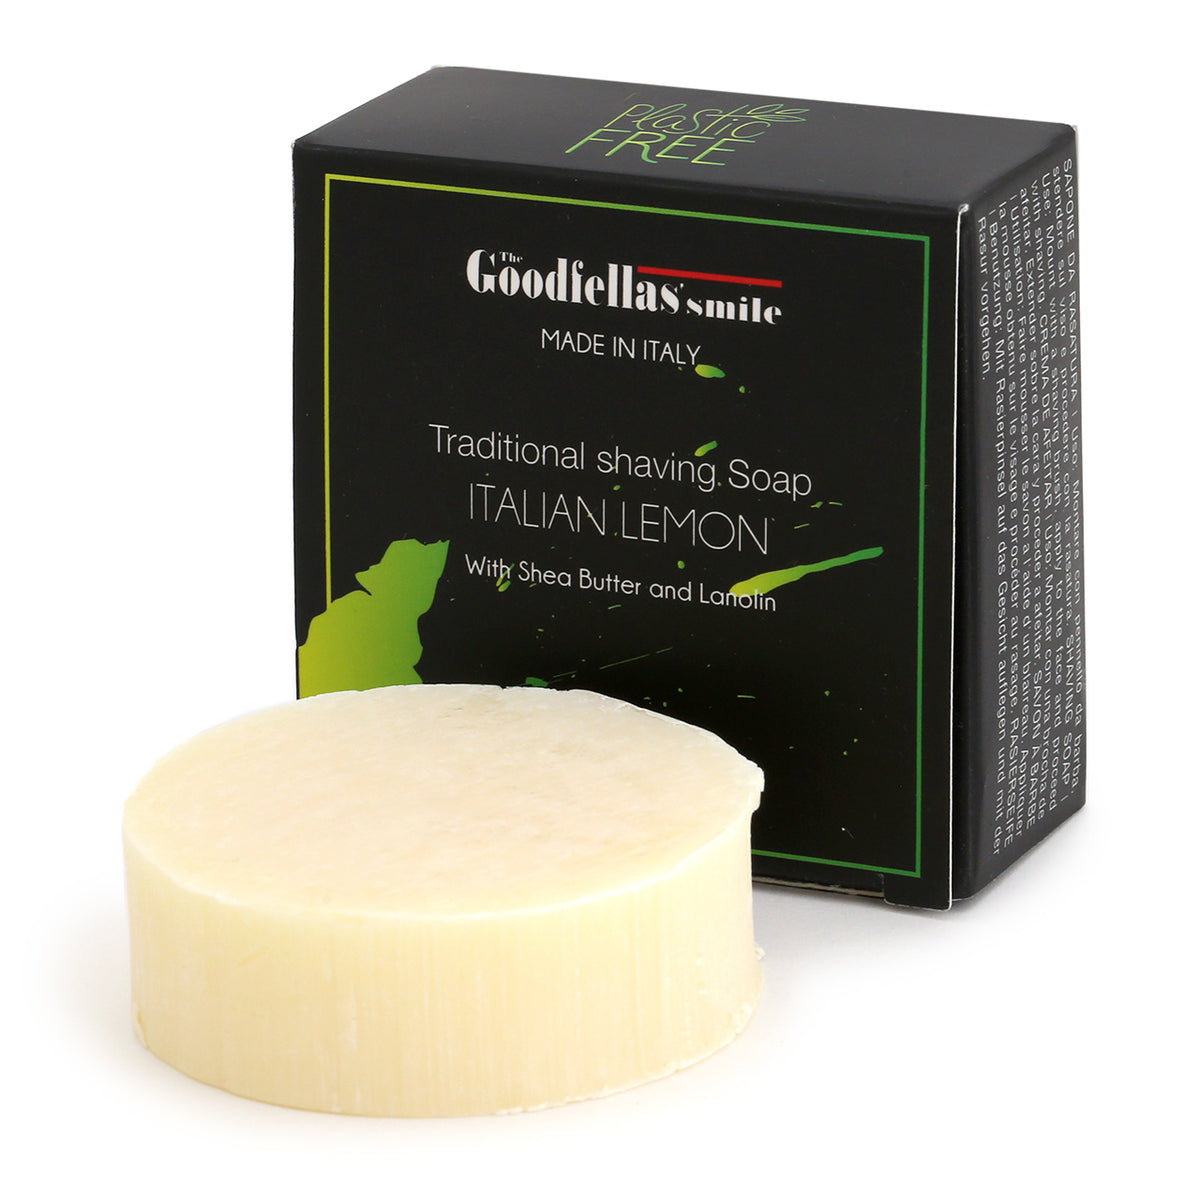 The Goodfellas Smile traditional Italian Lemon shaving soap in a black box